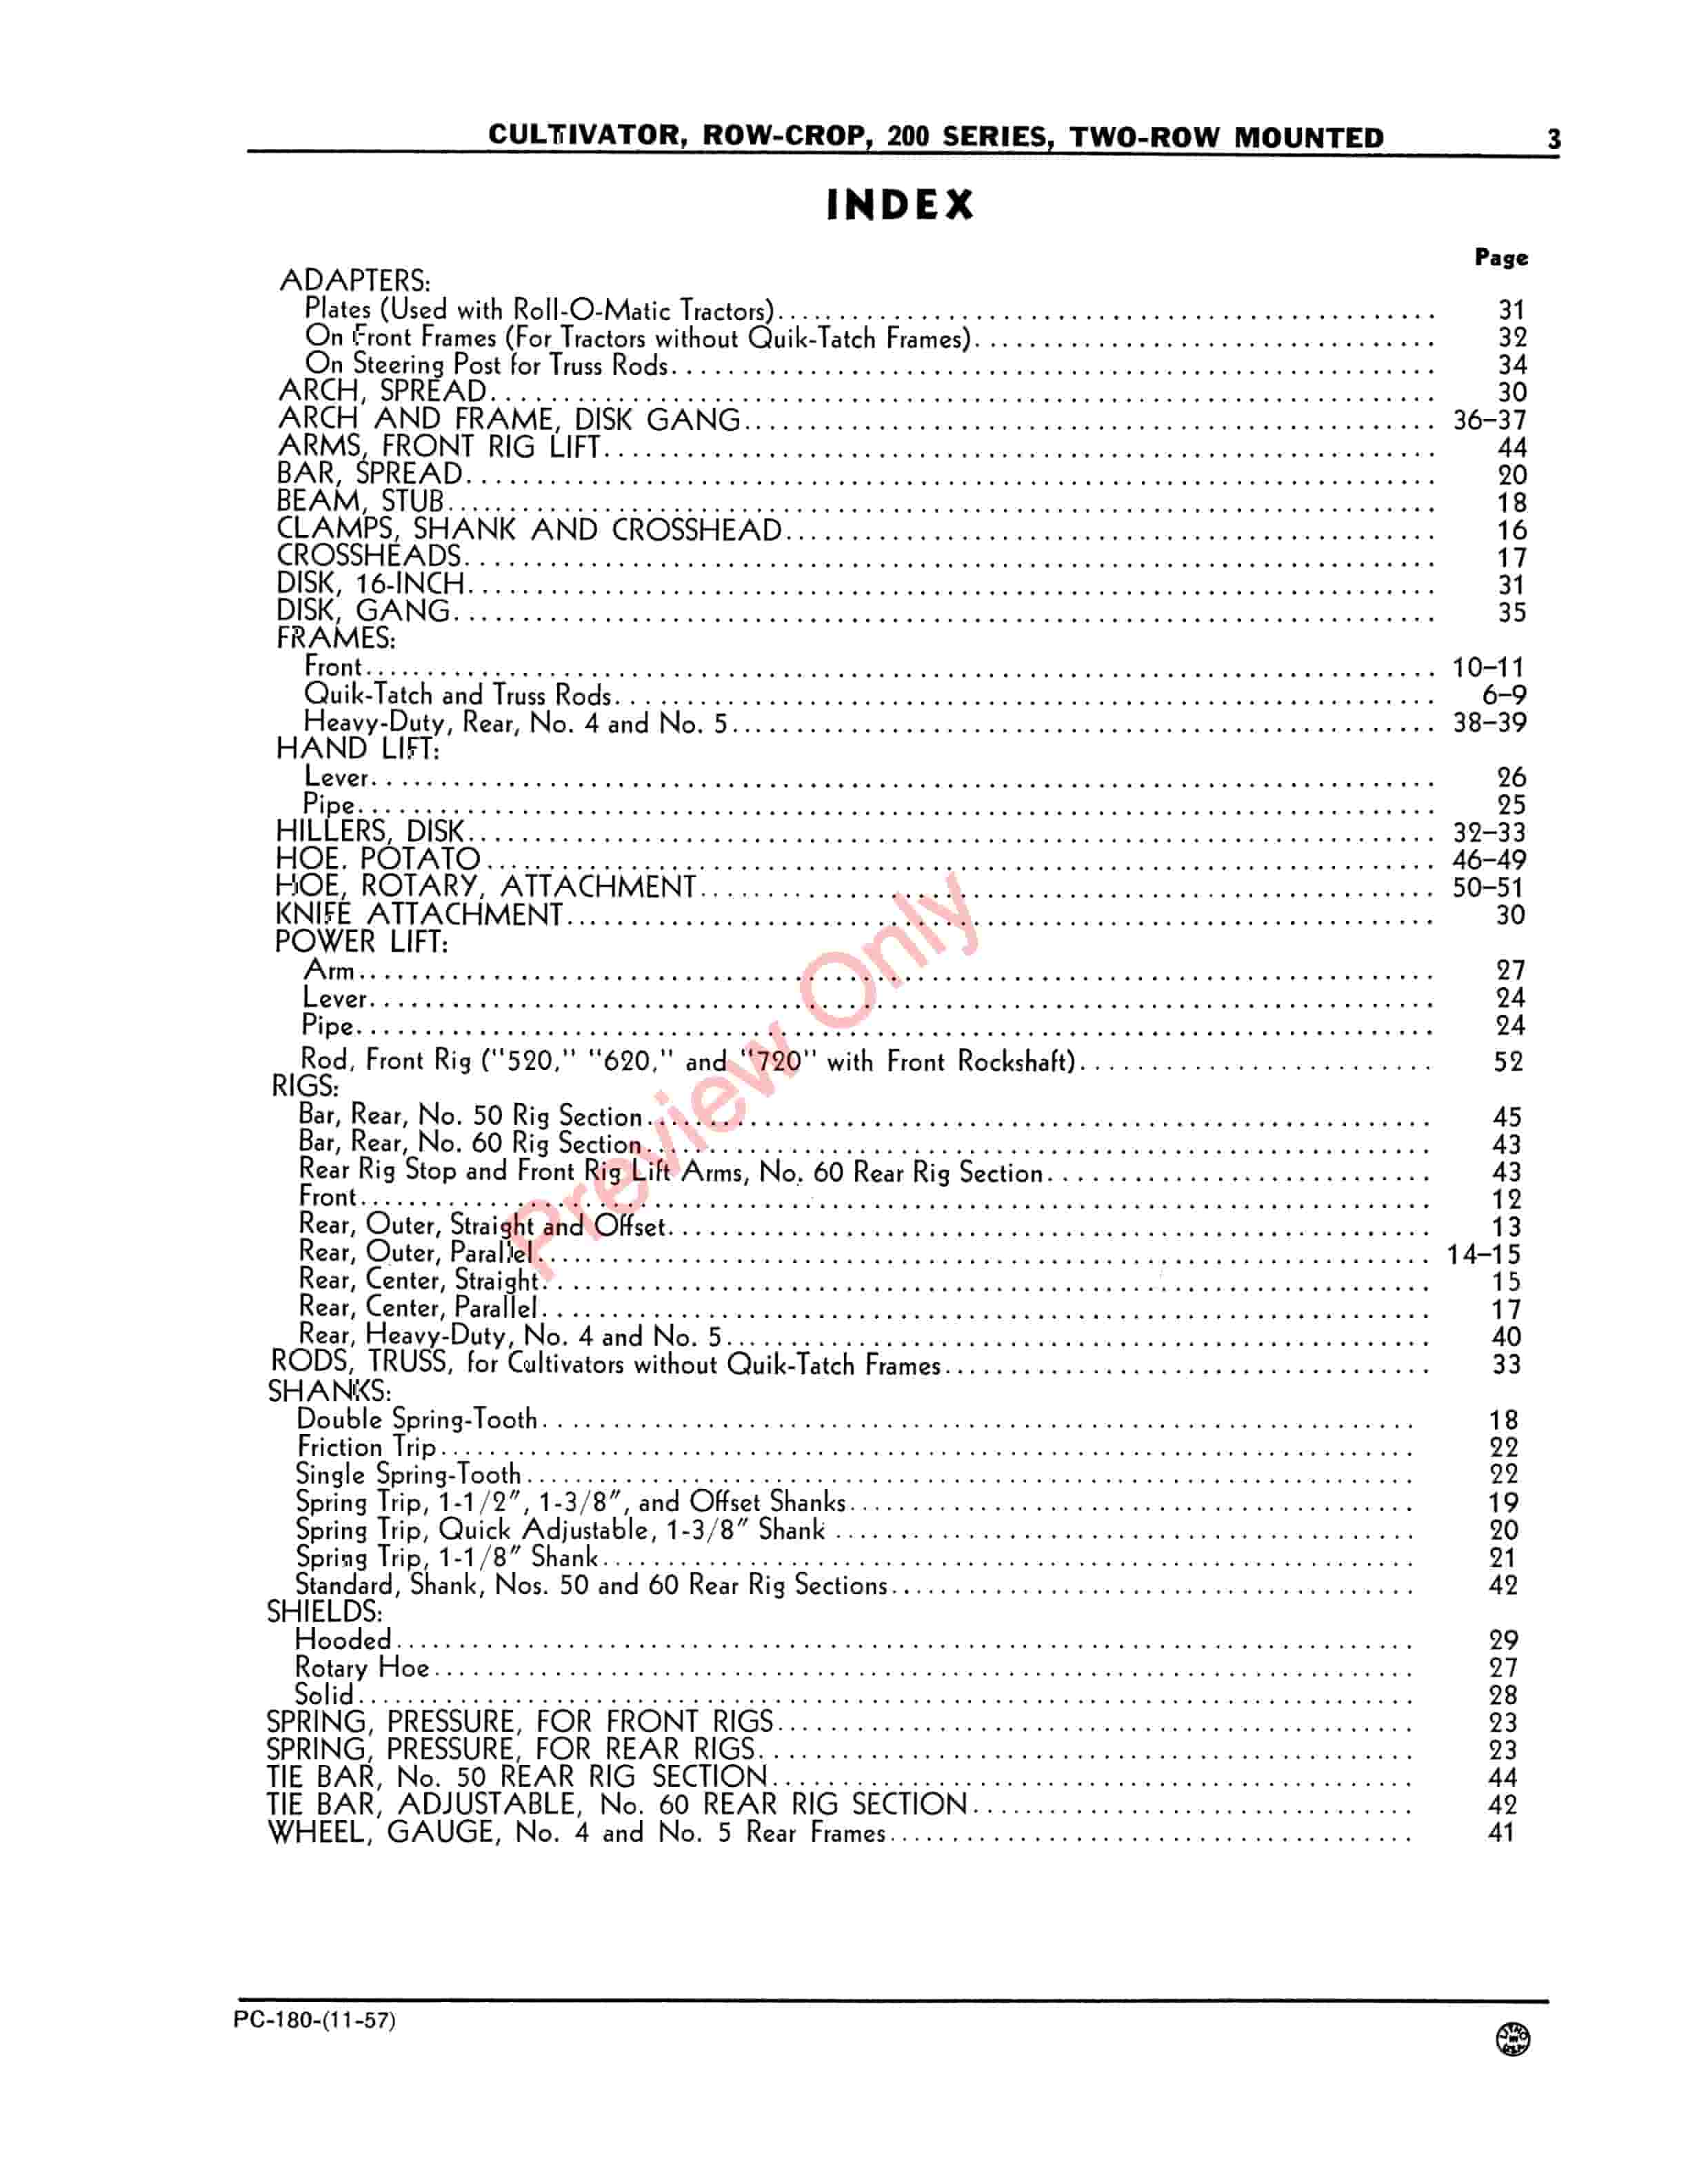 John Deere 200 Series Row-Crop Cultivators – Two-Row Mounted Parts Catalog PC180 01NOV57-5